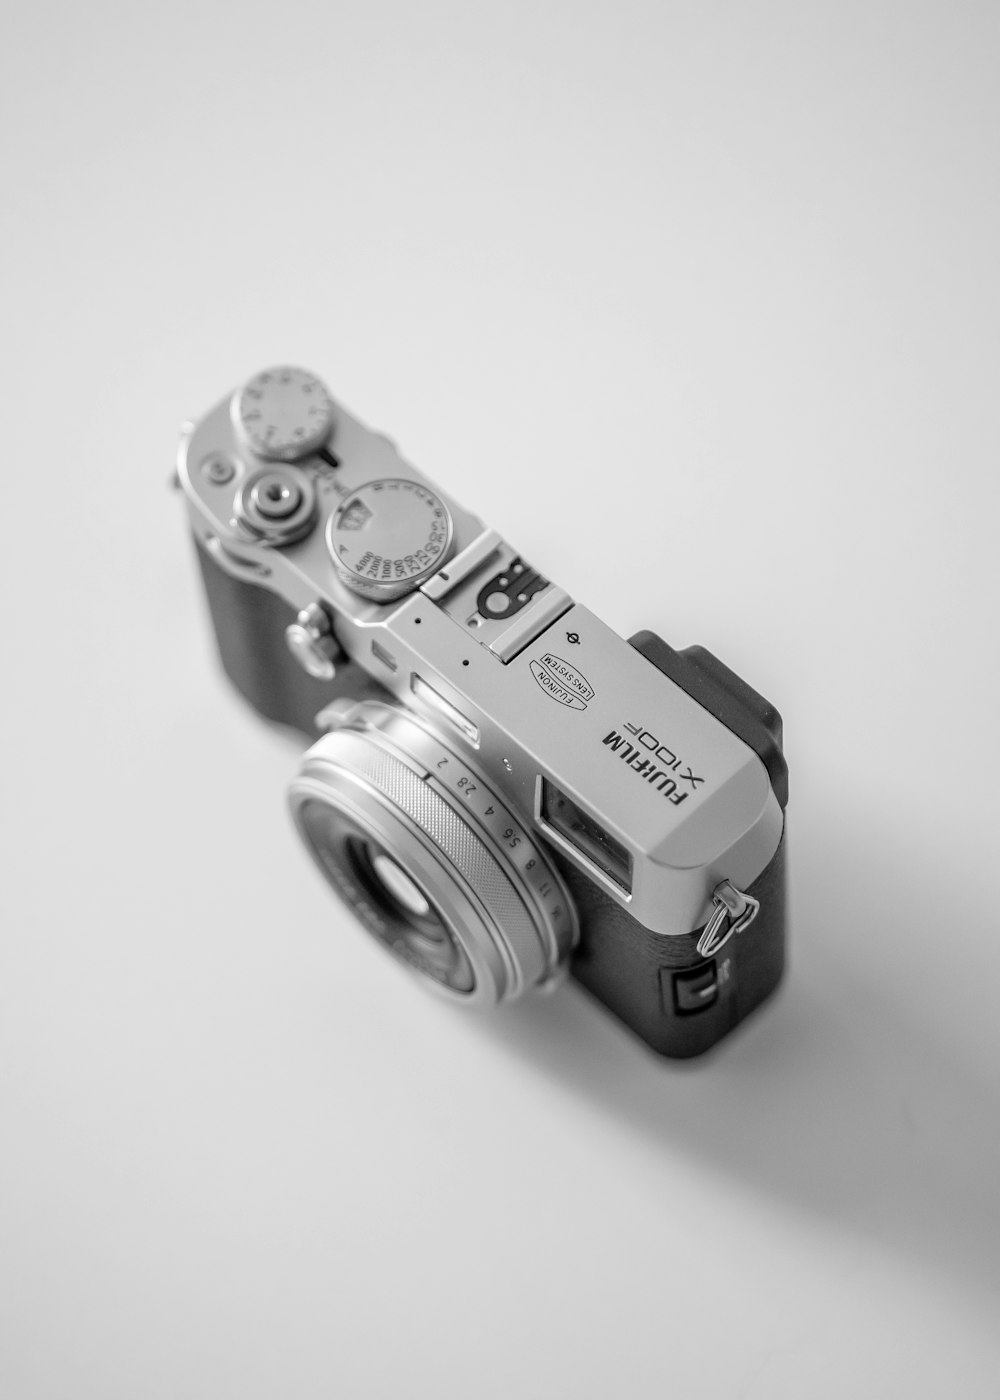 grayscale photo of camera